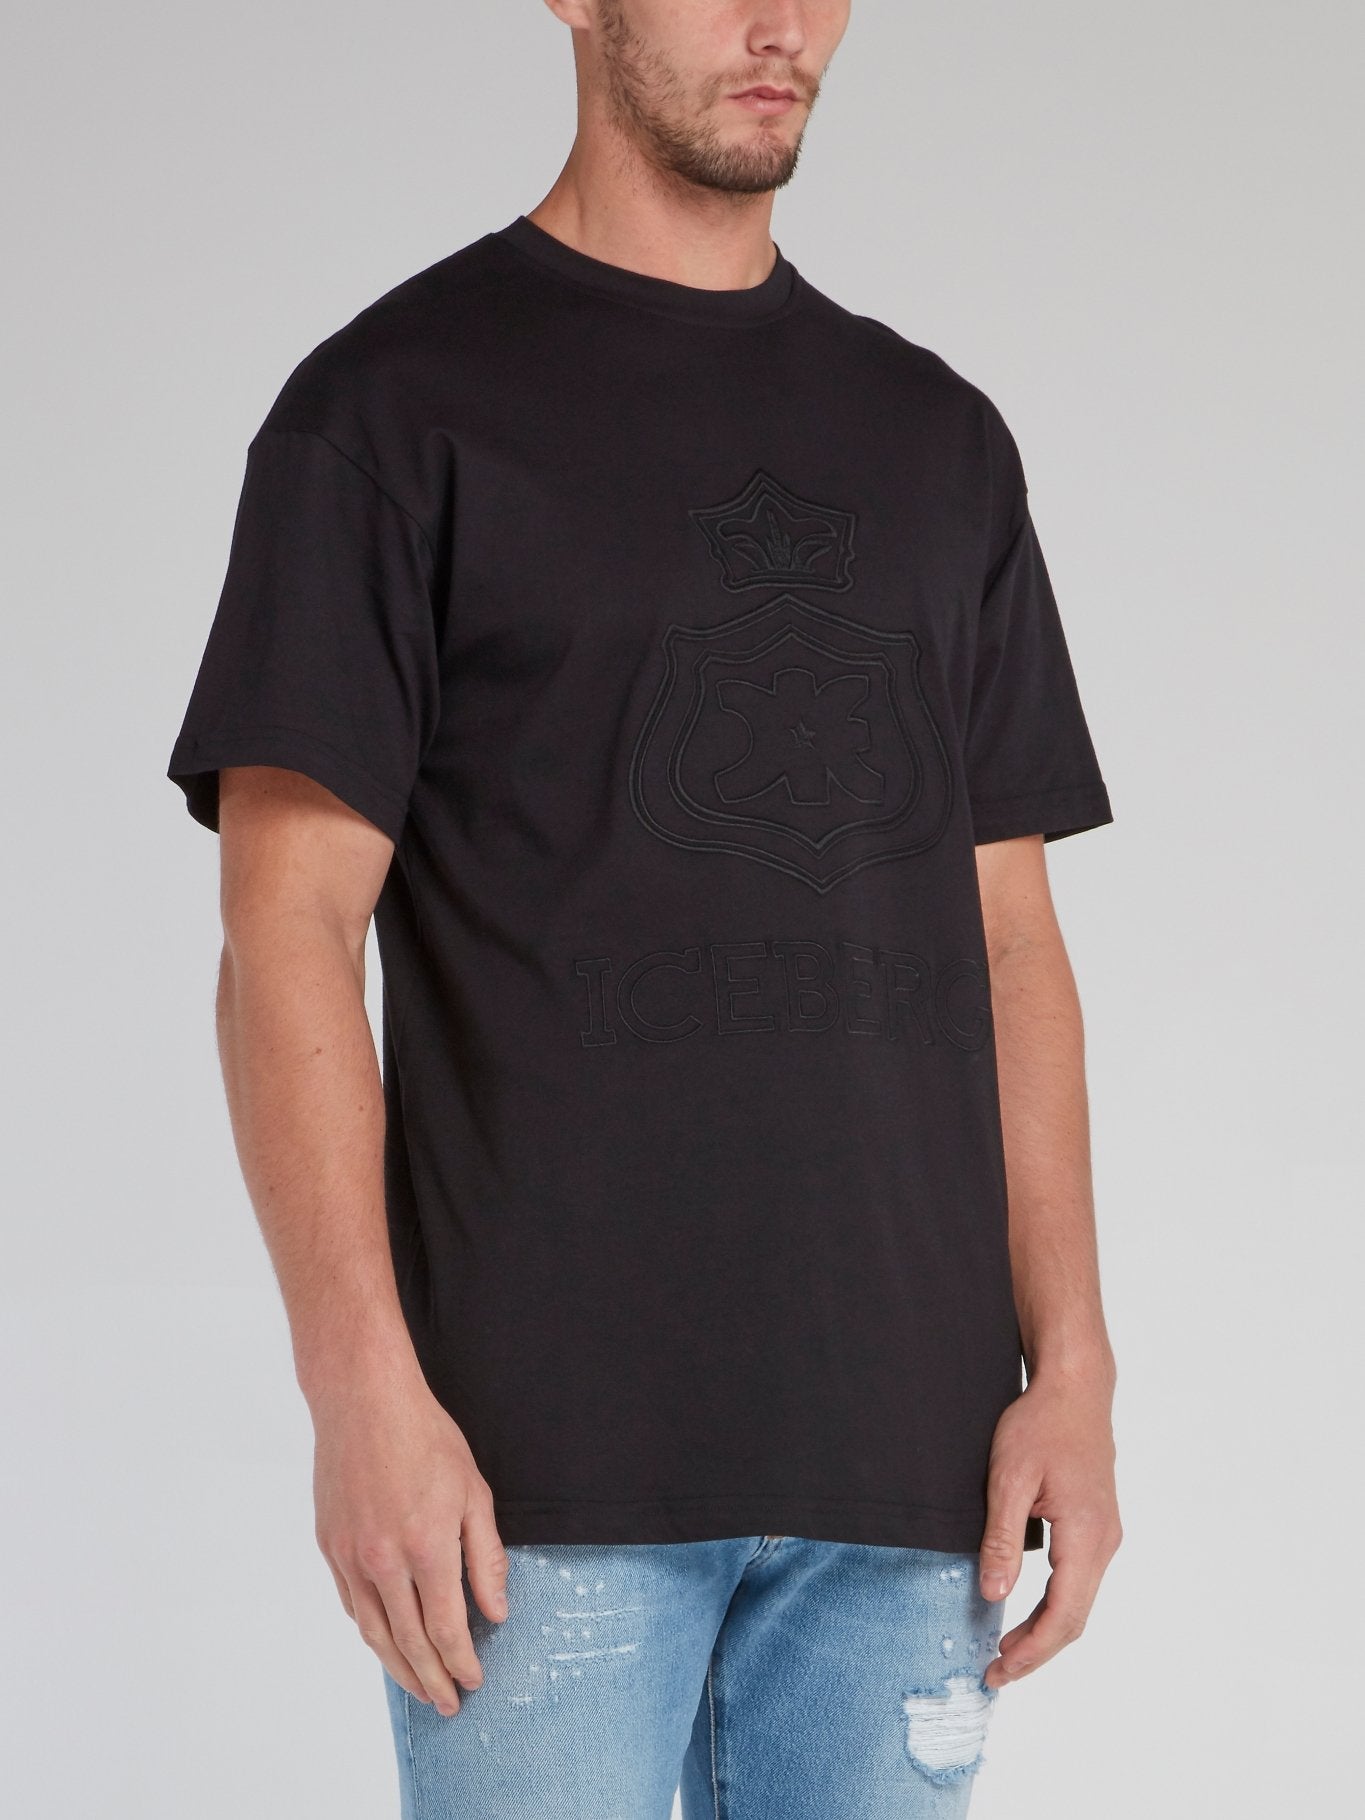 Black Embroidered Monogram T-Shirt